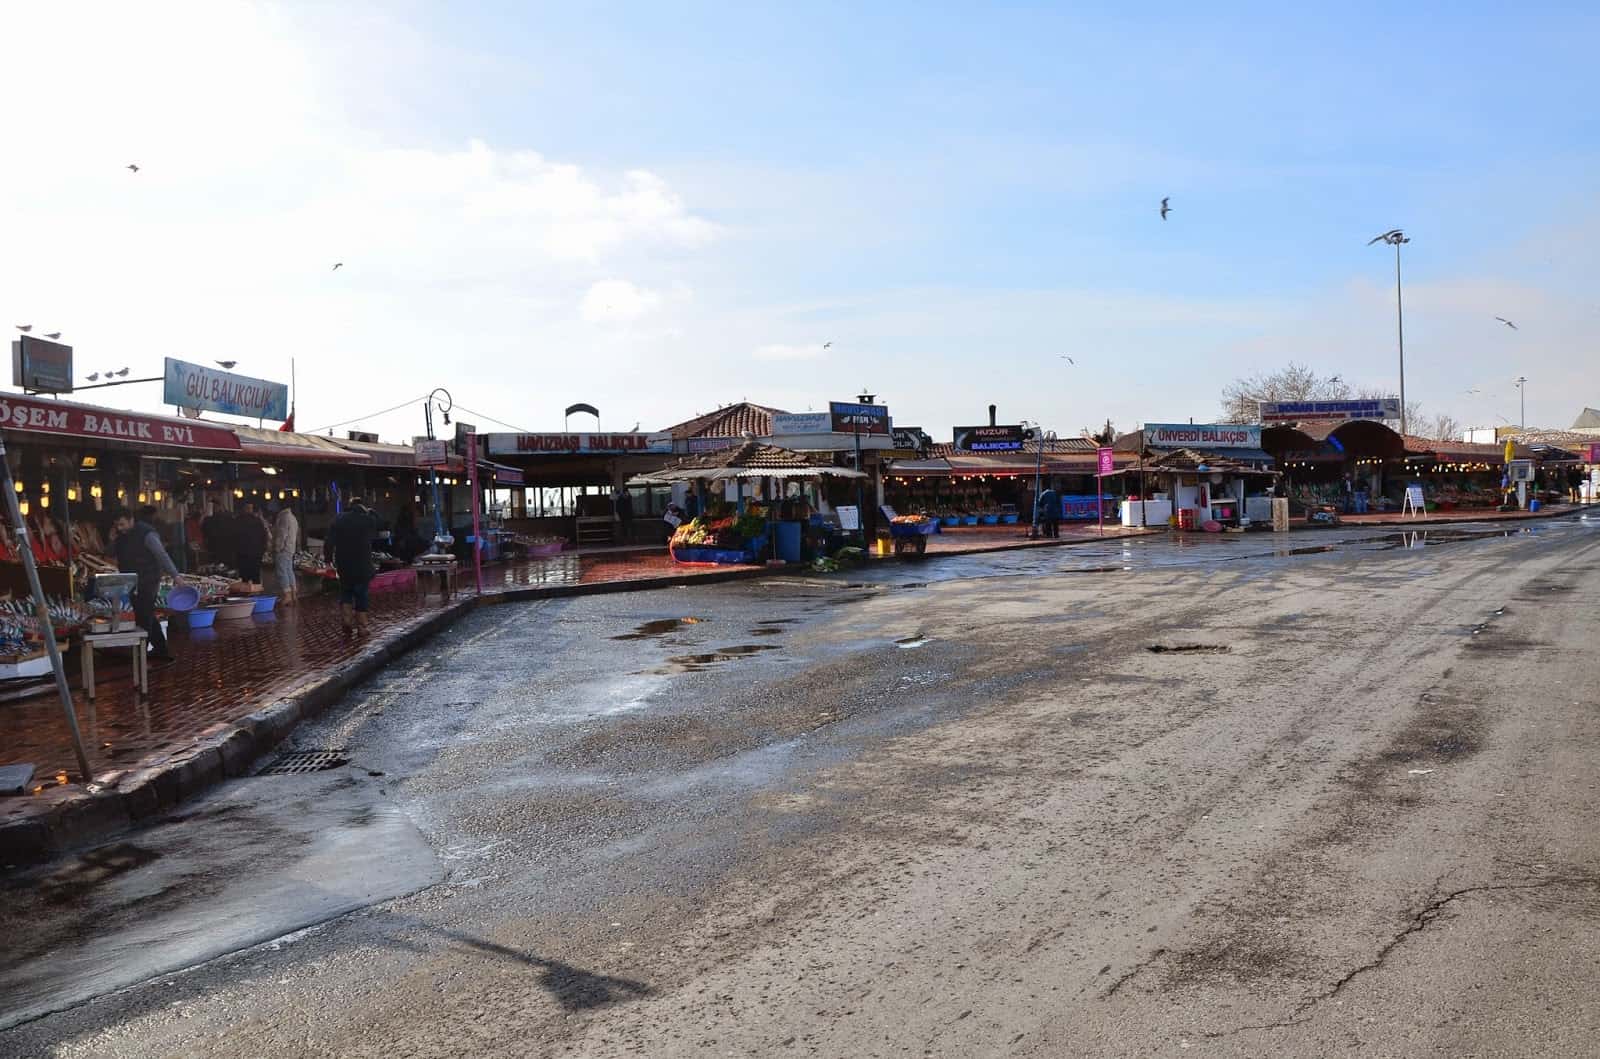 Kumkapı fish market in Kumkapı, Fatih, Istanbul, Turkey